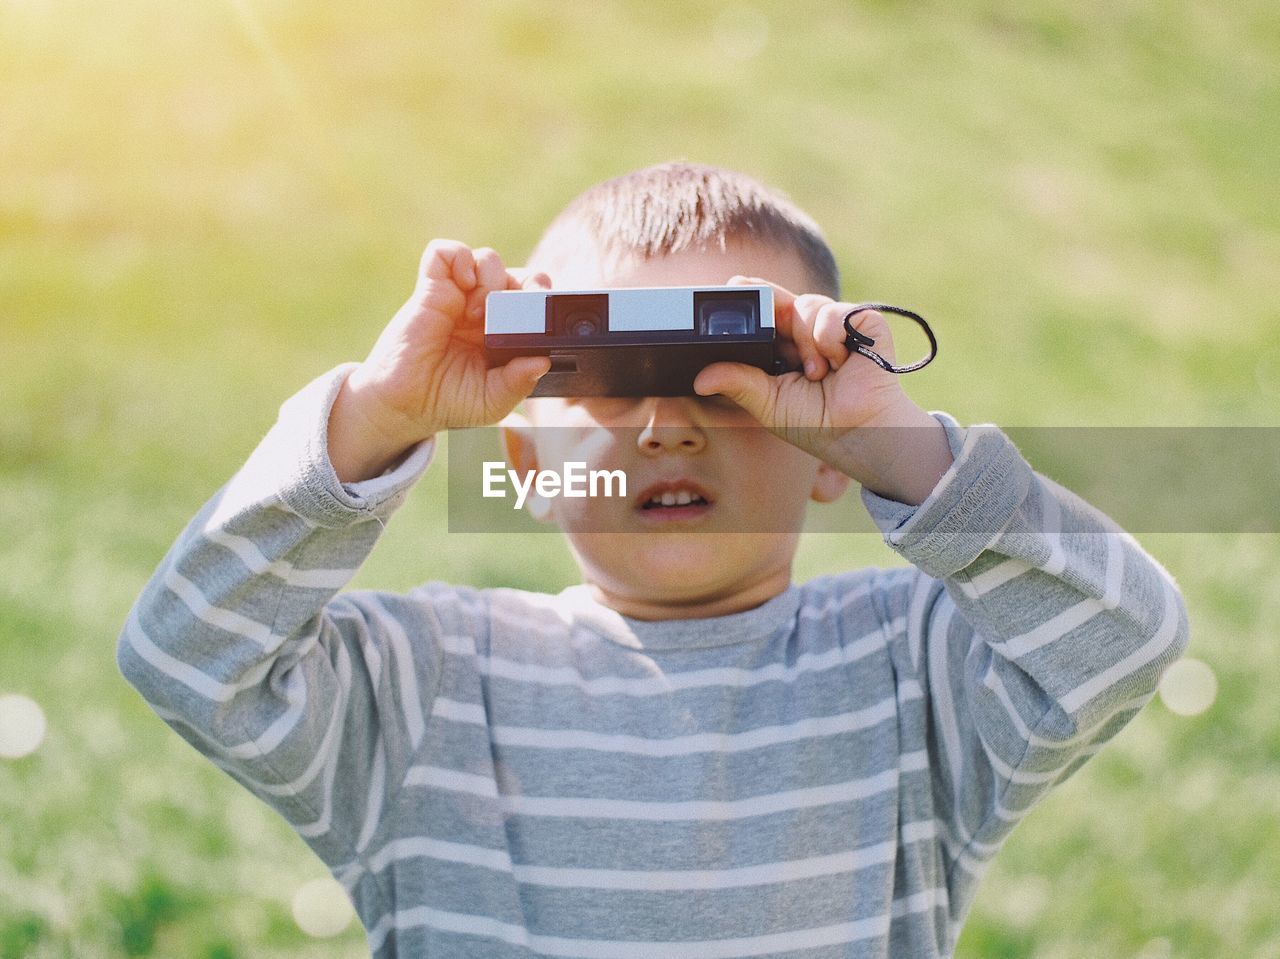 Boy looking through binoculars on grass